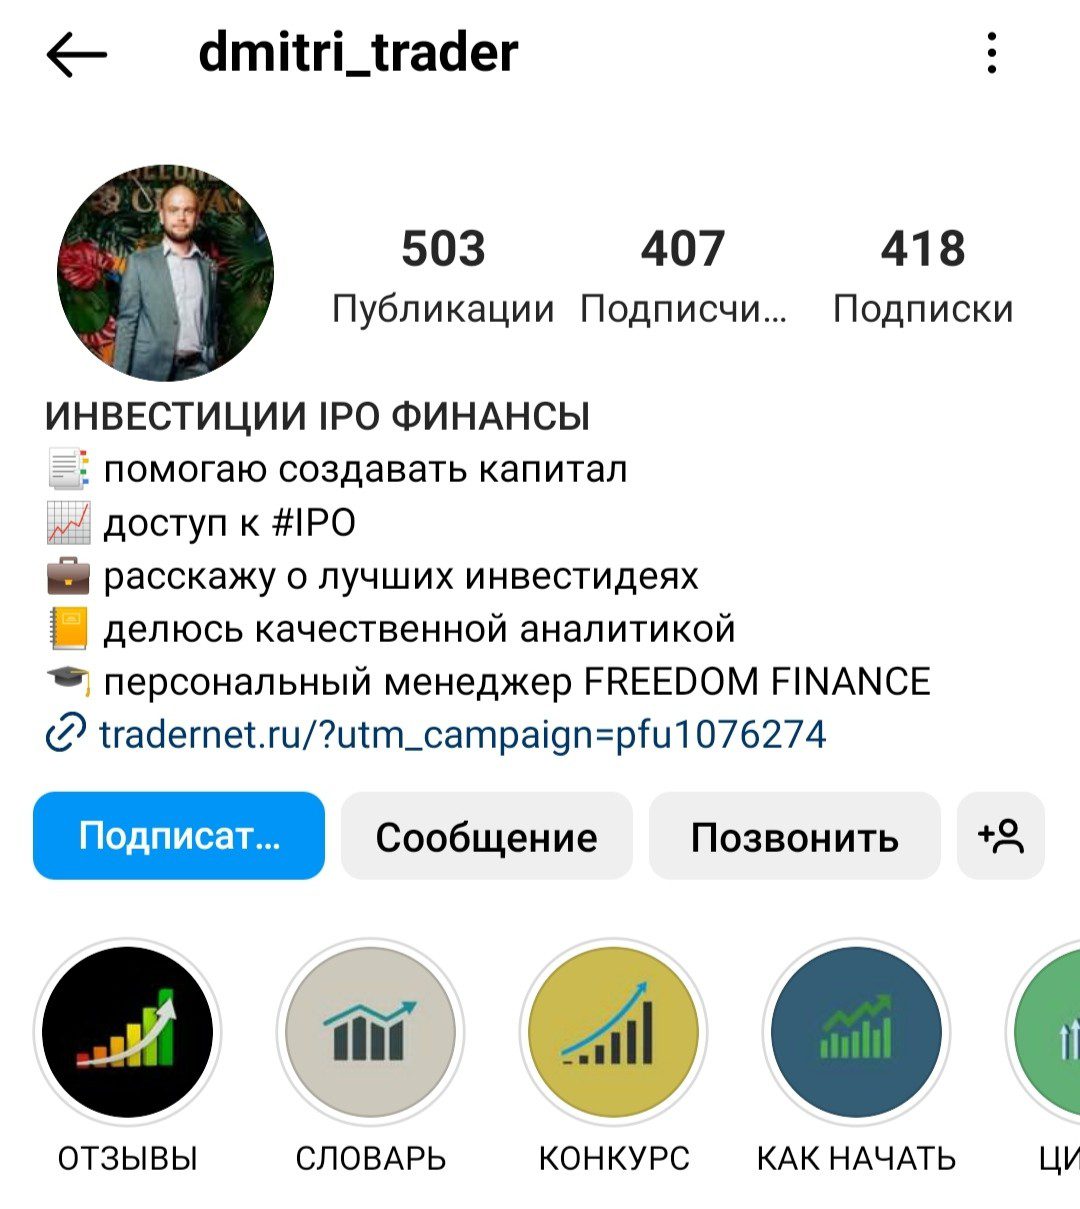 Dmitri Trader инстаграм